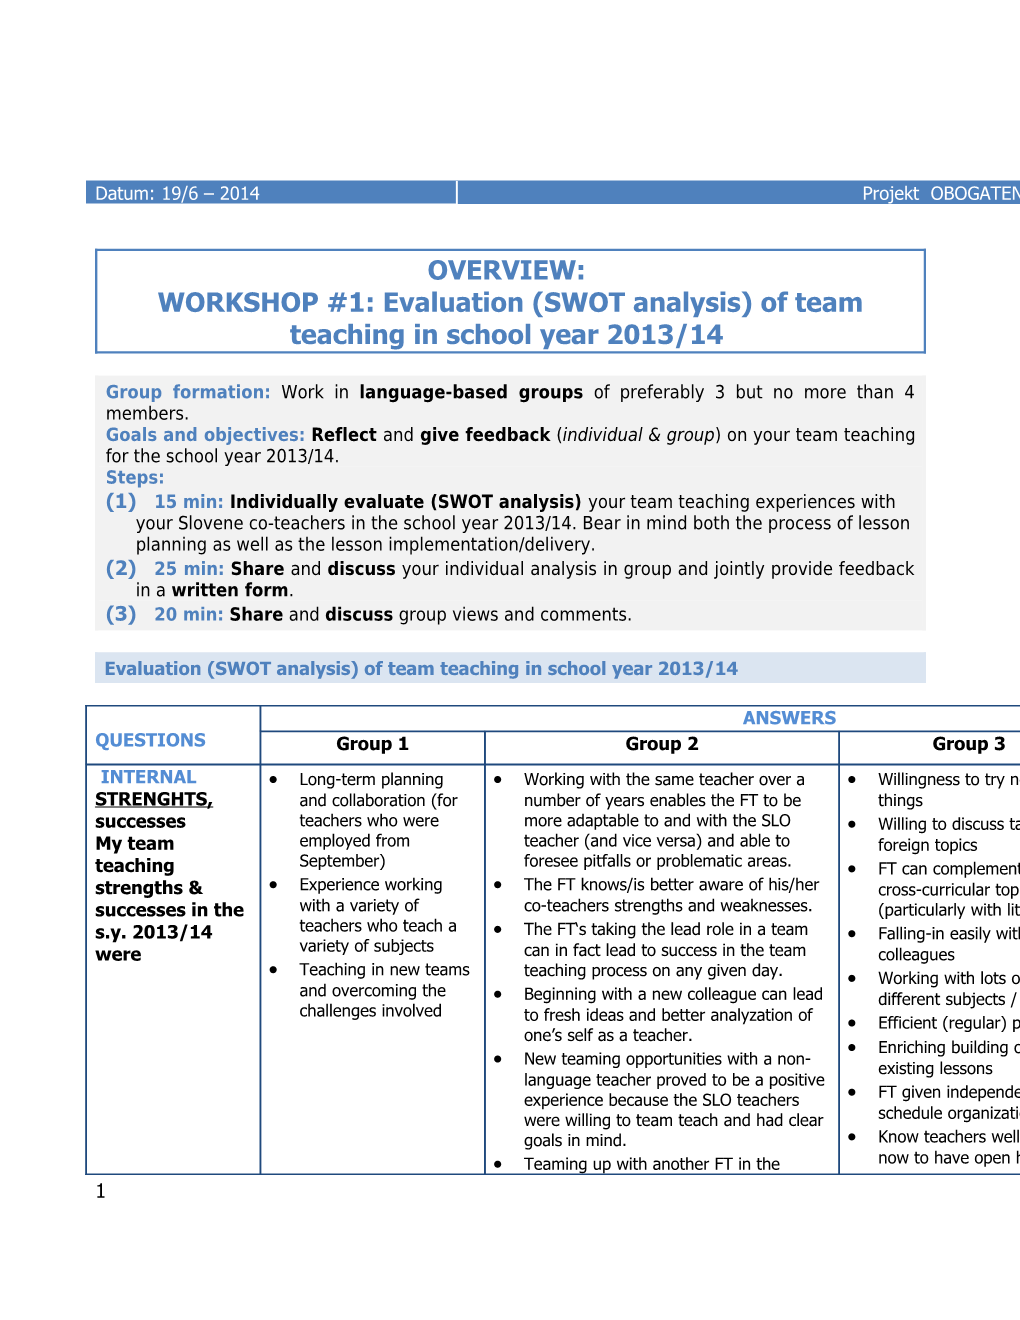 WORKSHOP #1: Evaluation (SWOT Analysis) of Team Teaching in School Year 2013/14